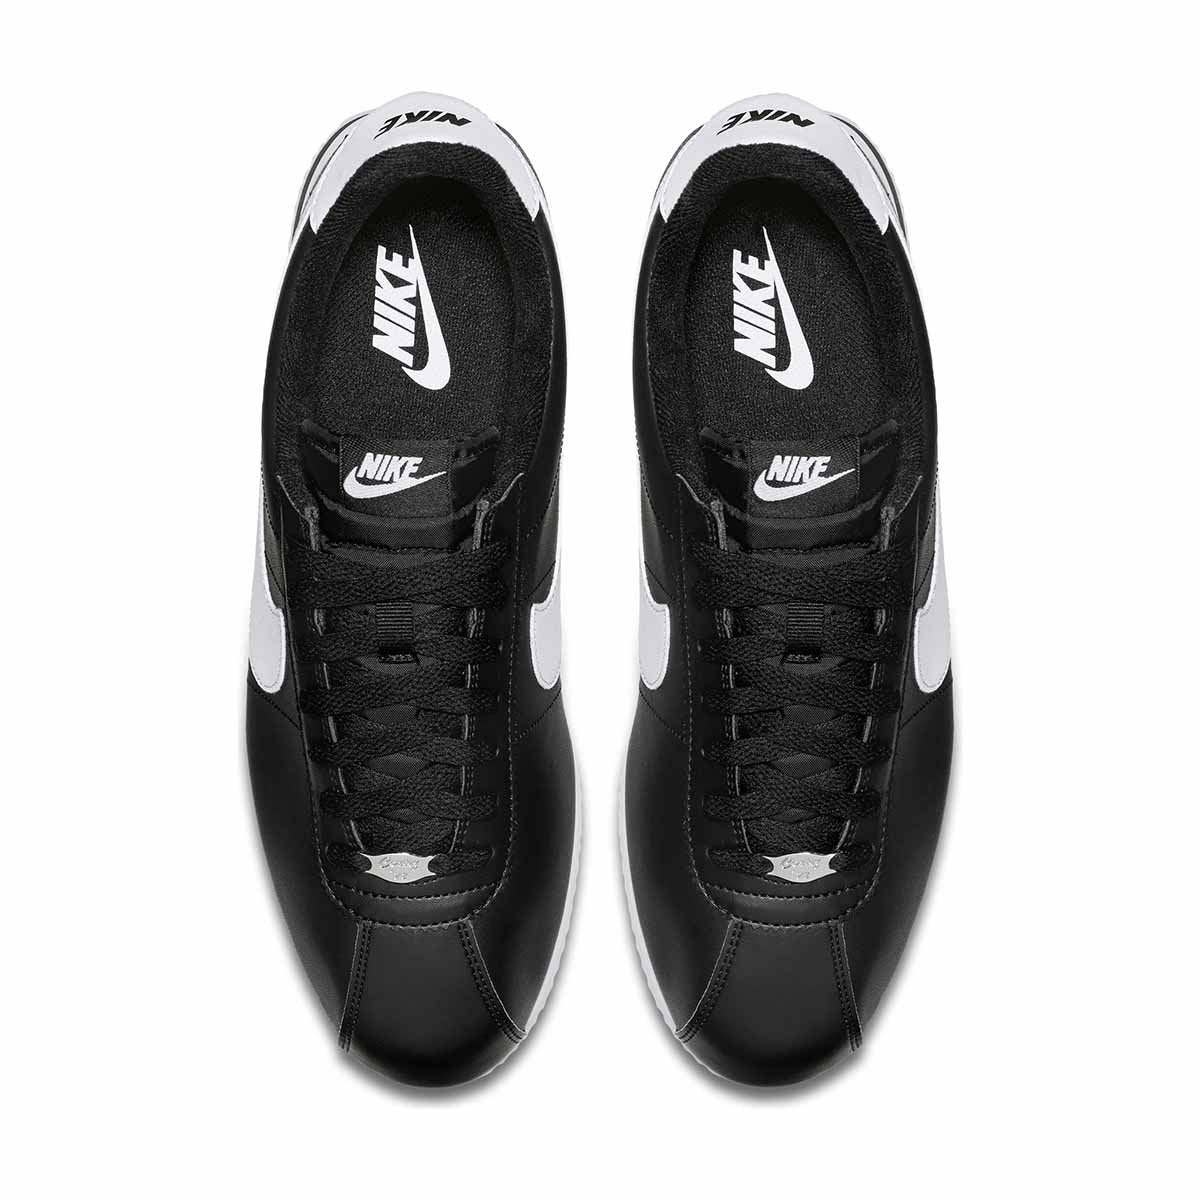 Buy the Nike Cortez Basic Leather White/Black Casual Shoes Size